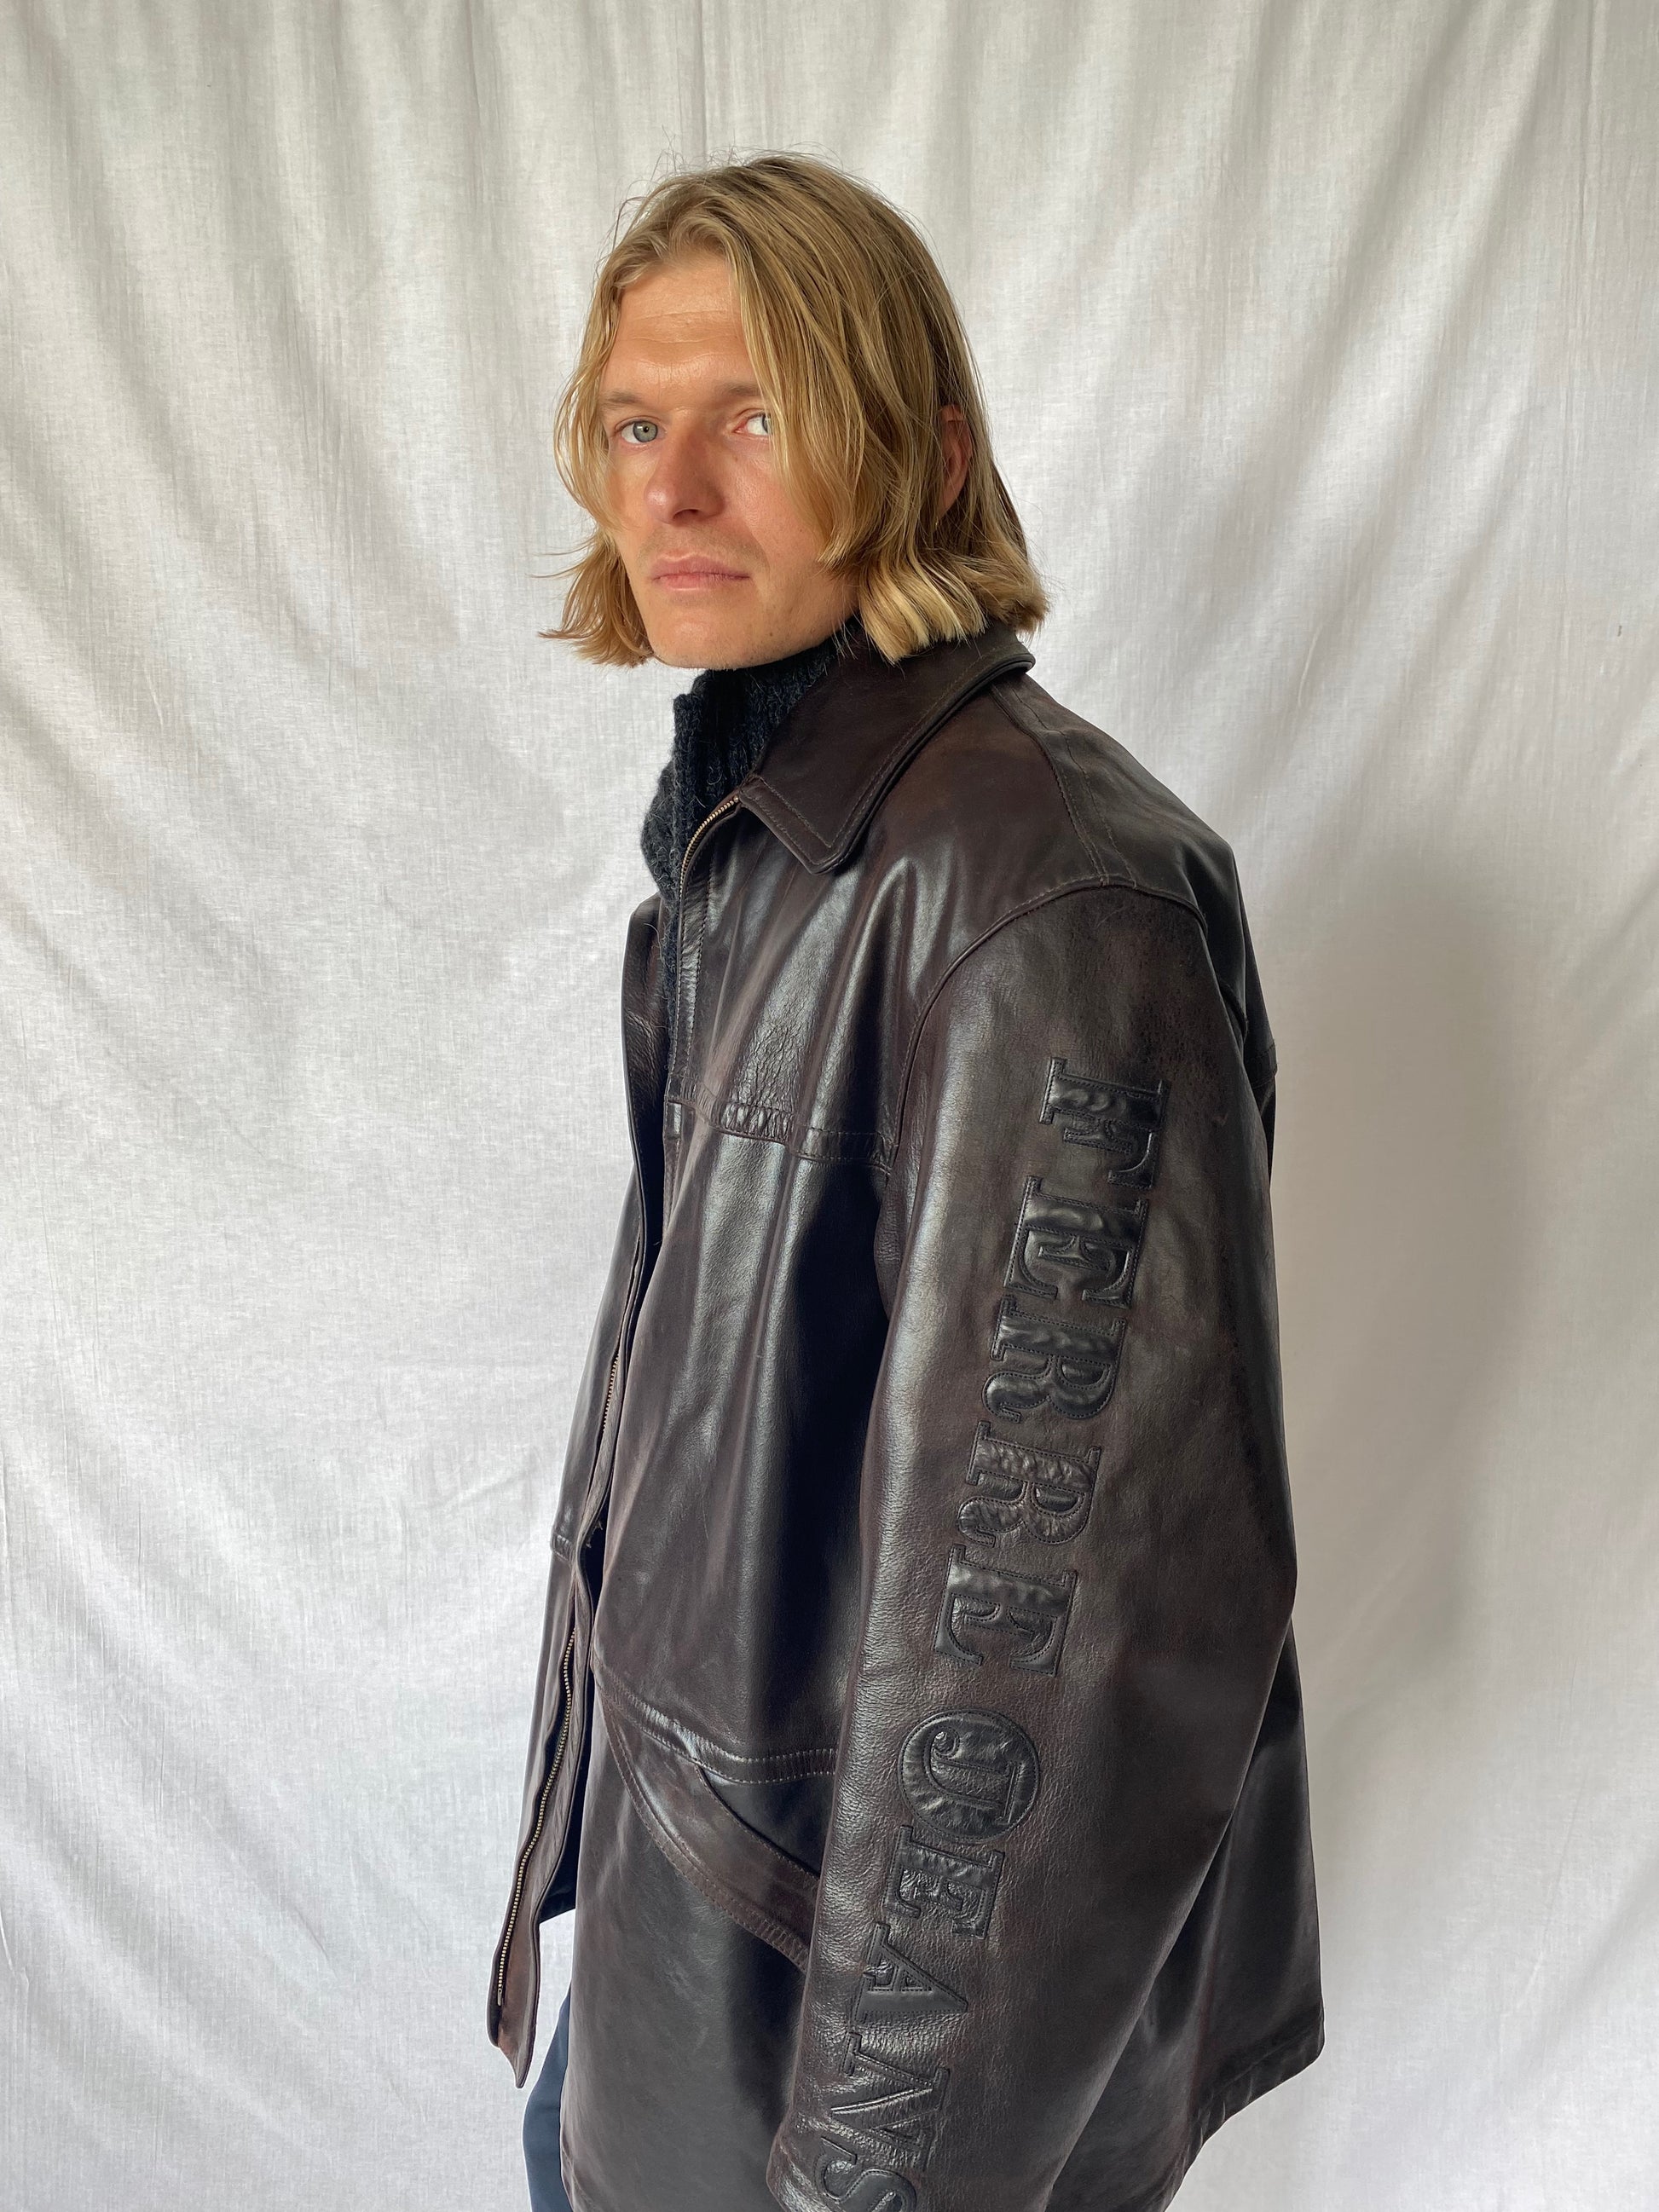 Gianfranco Ferré Leather Jacket – Bimbo Vintage